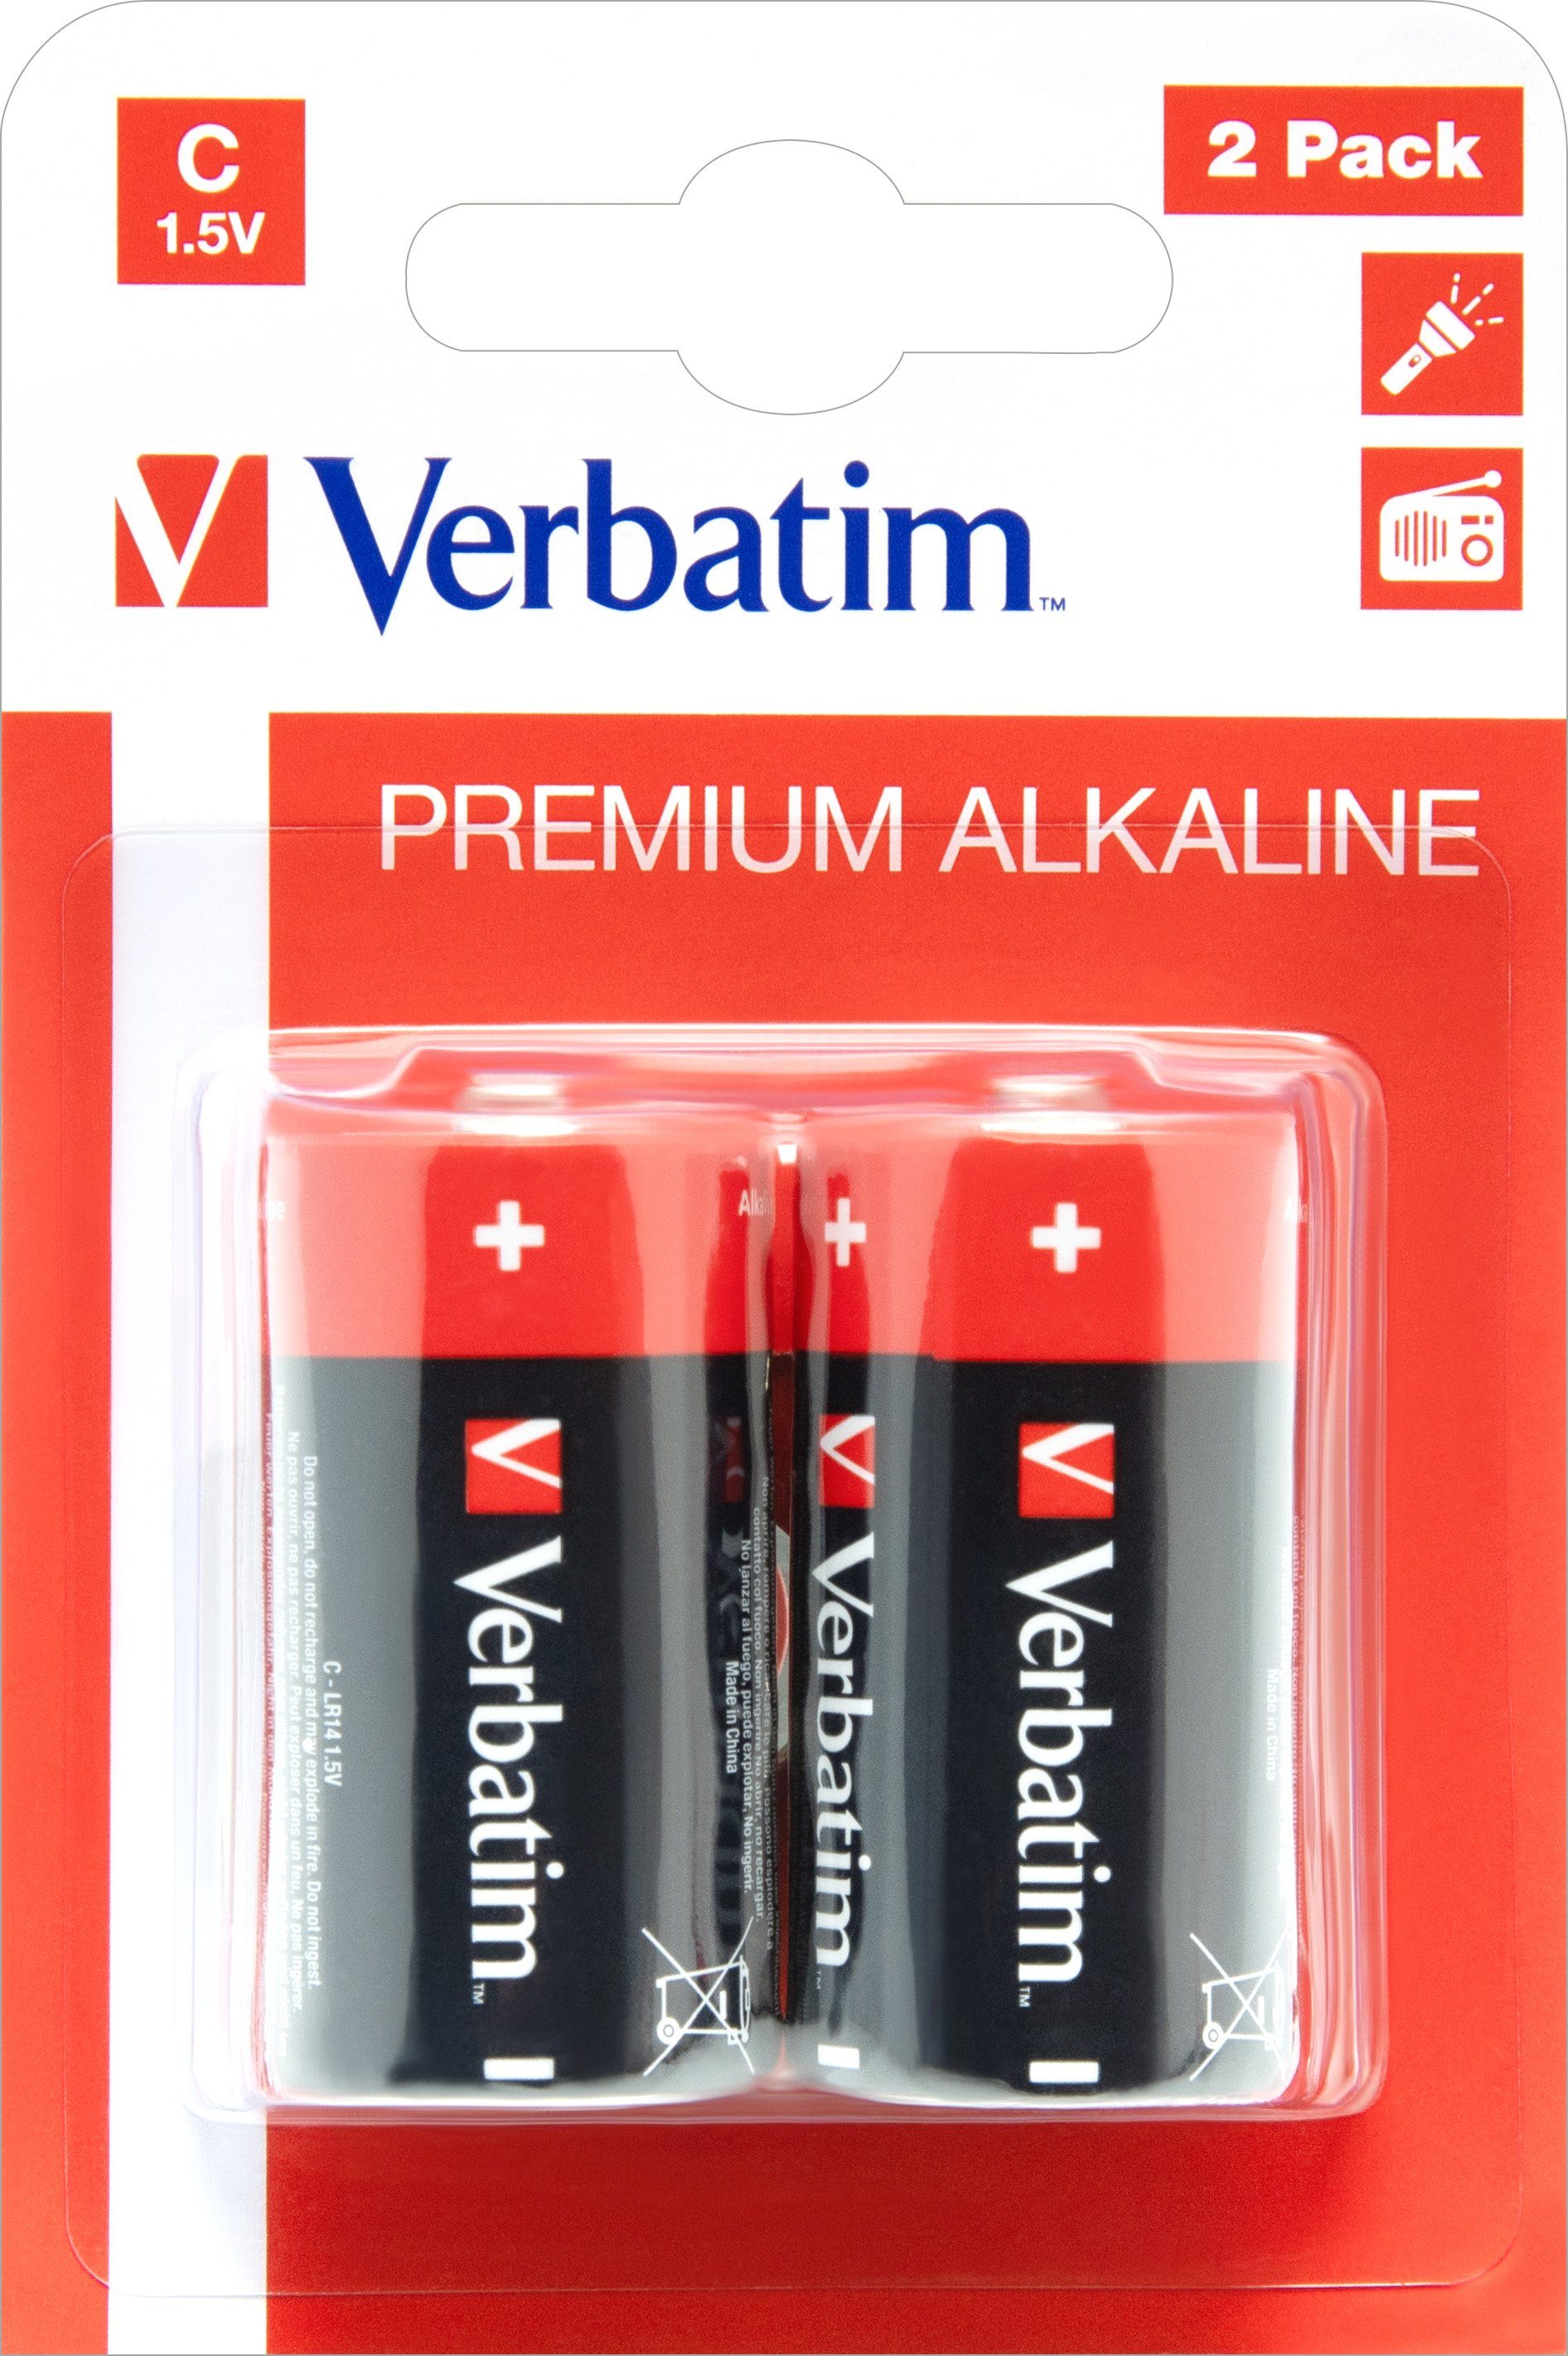 Baby, Alkaline, Blist 1.5V Batterie LR14, C, Verbatim Verbatim Retail Premium, Batterie